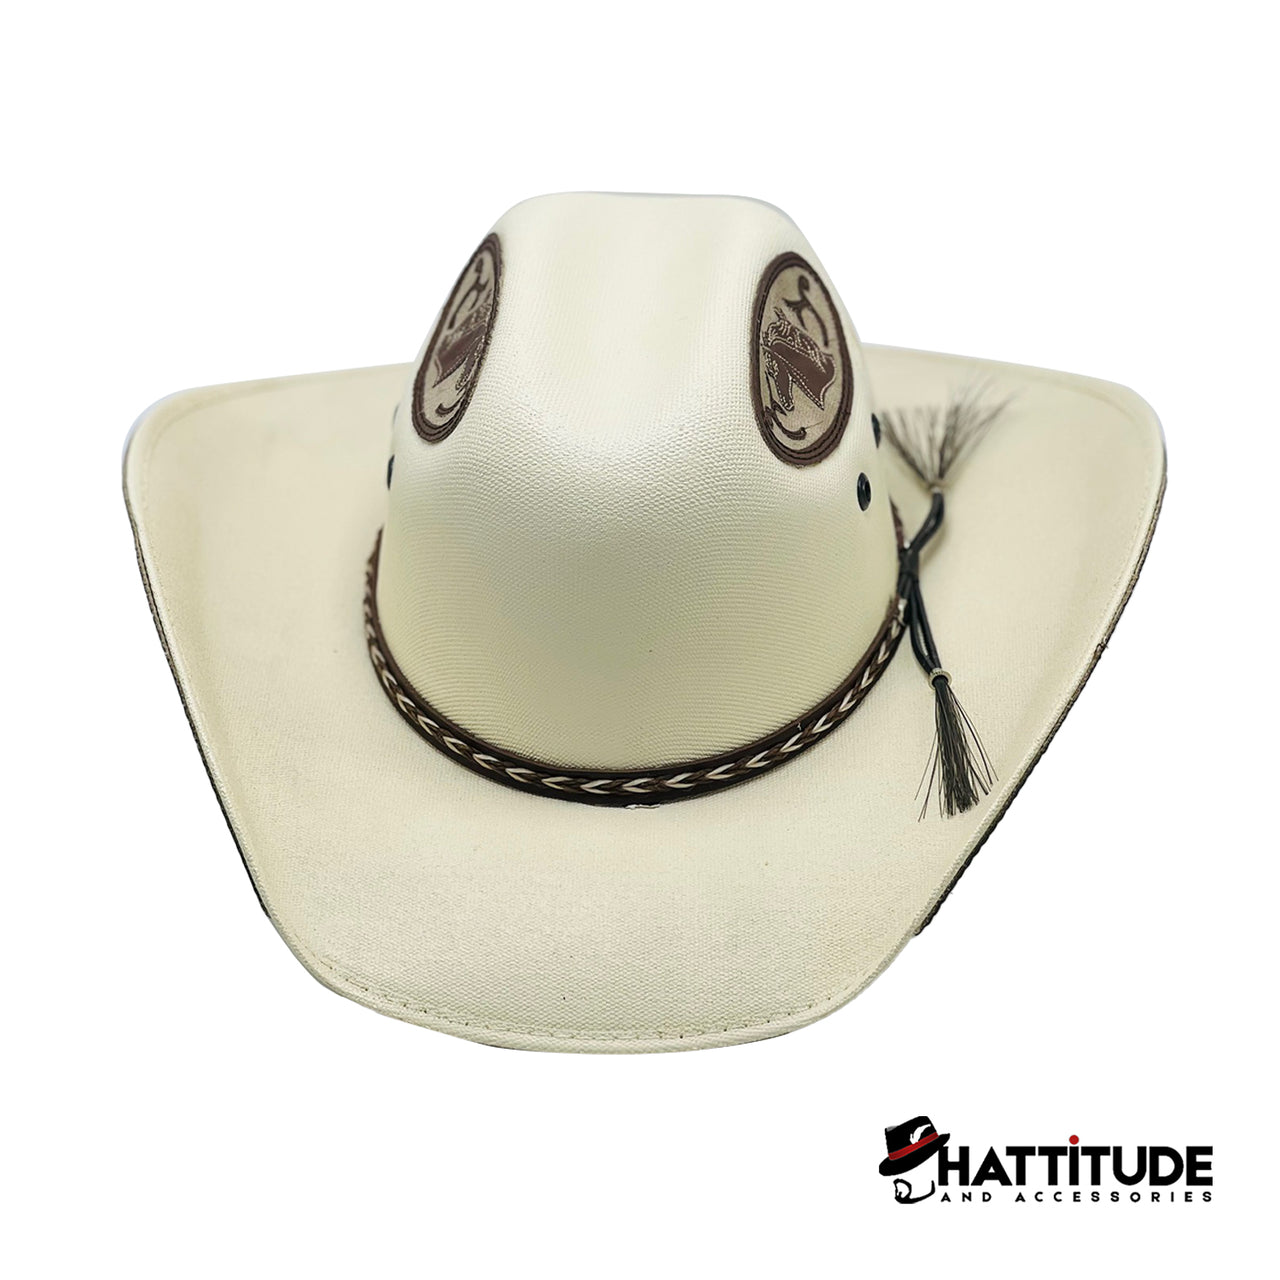 New Mexico - Hattitude